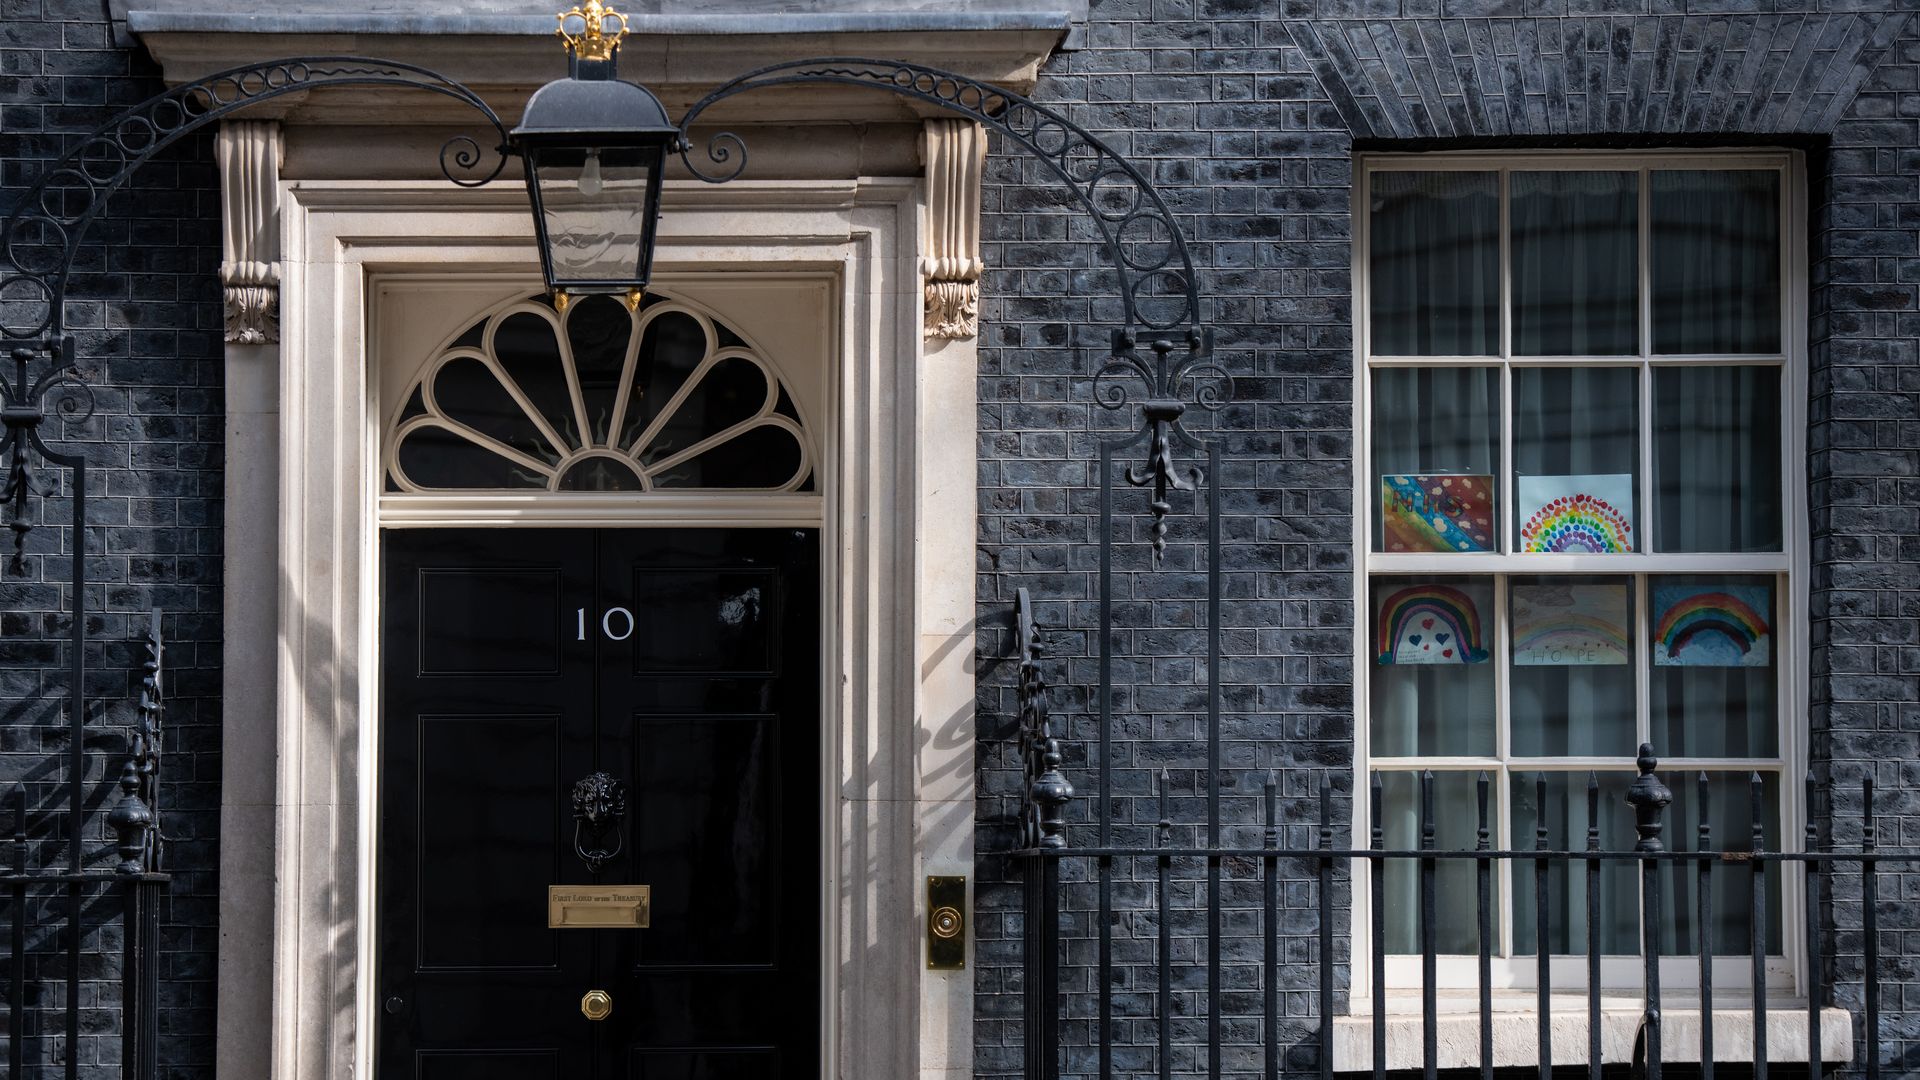 No. 10 Downing Street